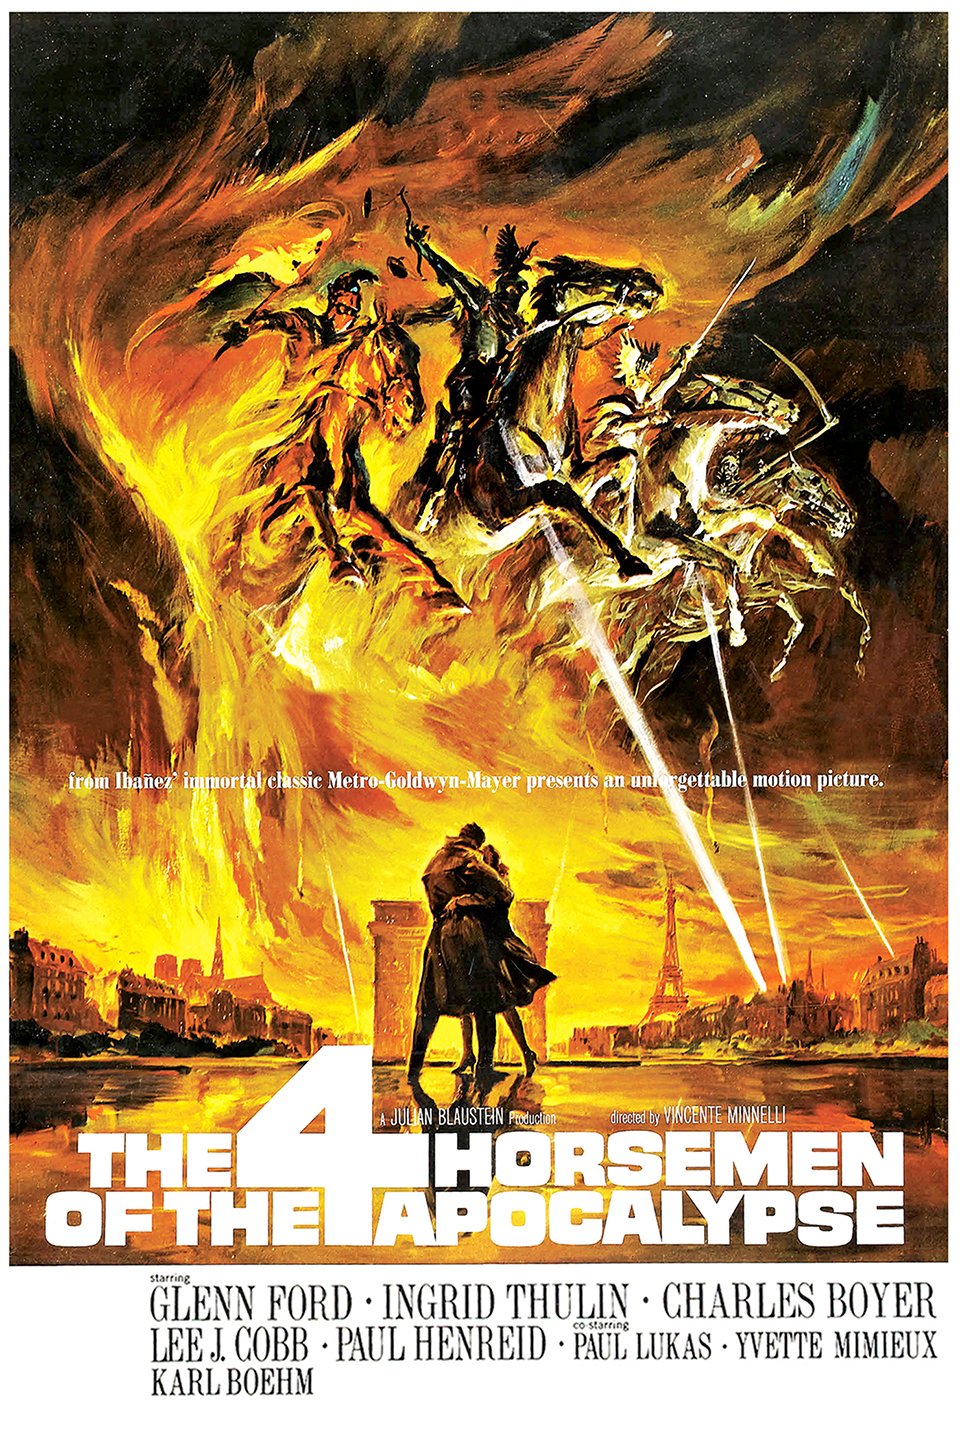 The Four Horsemen Of The Apocalypse Names